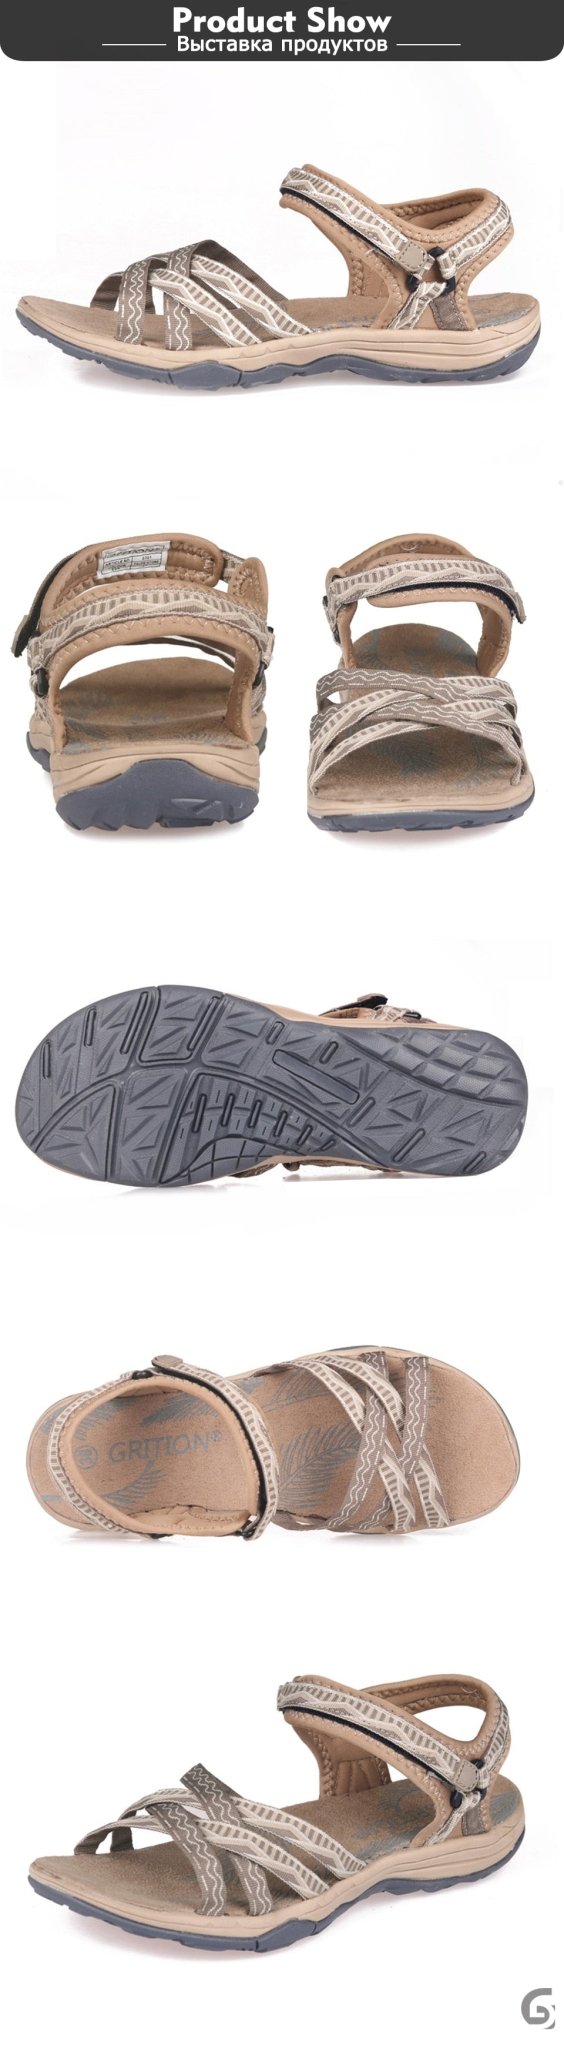 Beach Sandals Women Summer Outdoor Flat Sandals Ladies Open Toe Shoes Lightweight Breathable Walking Hiking Sandals-26